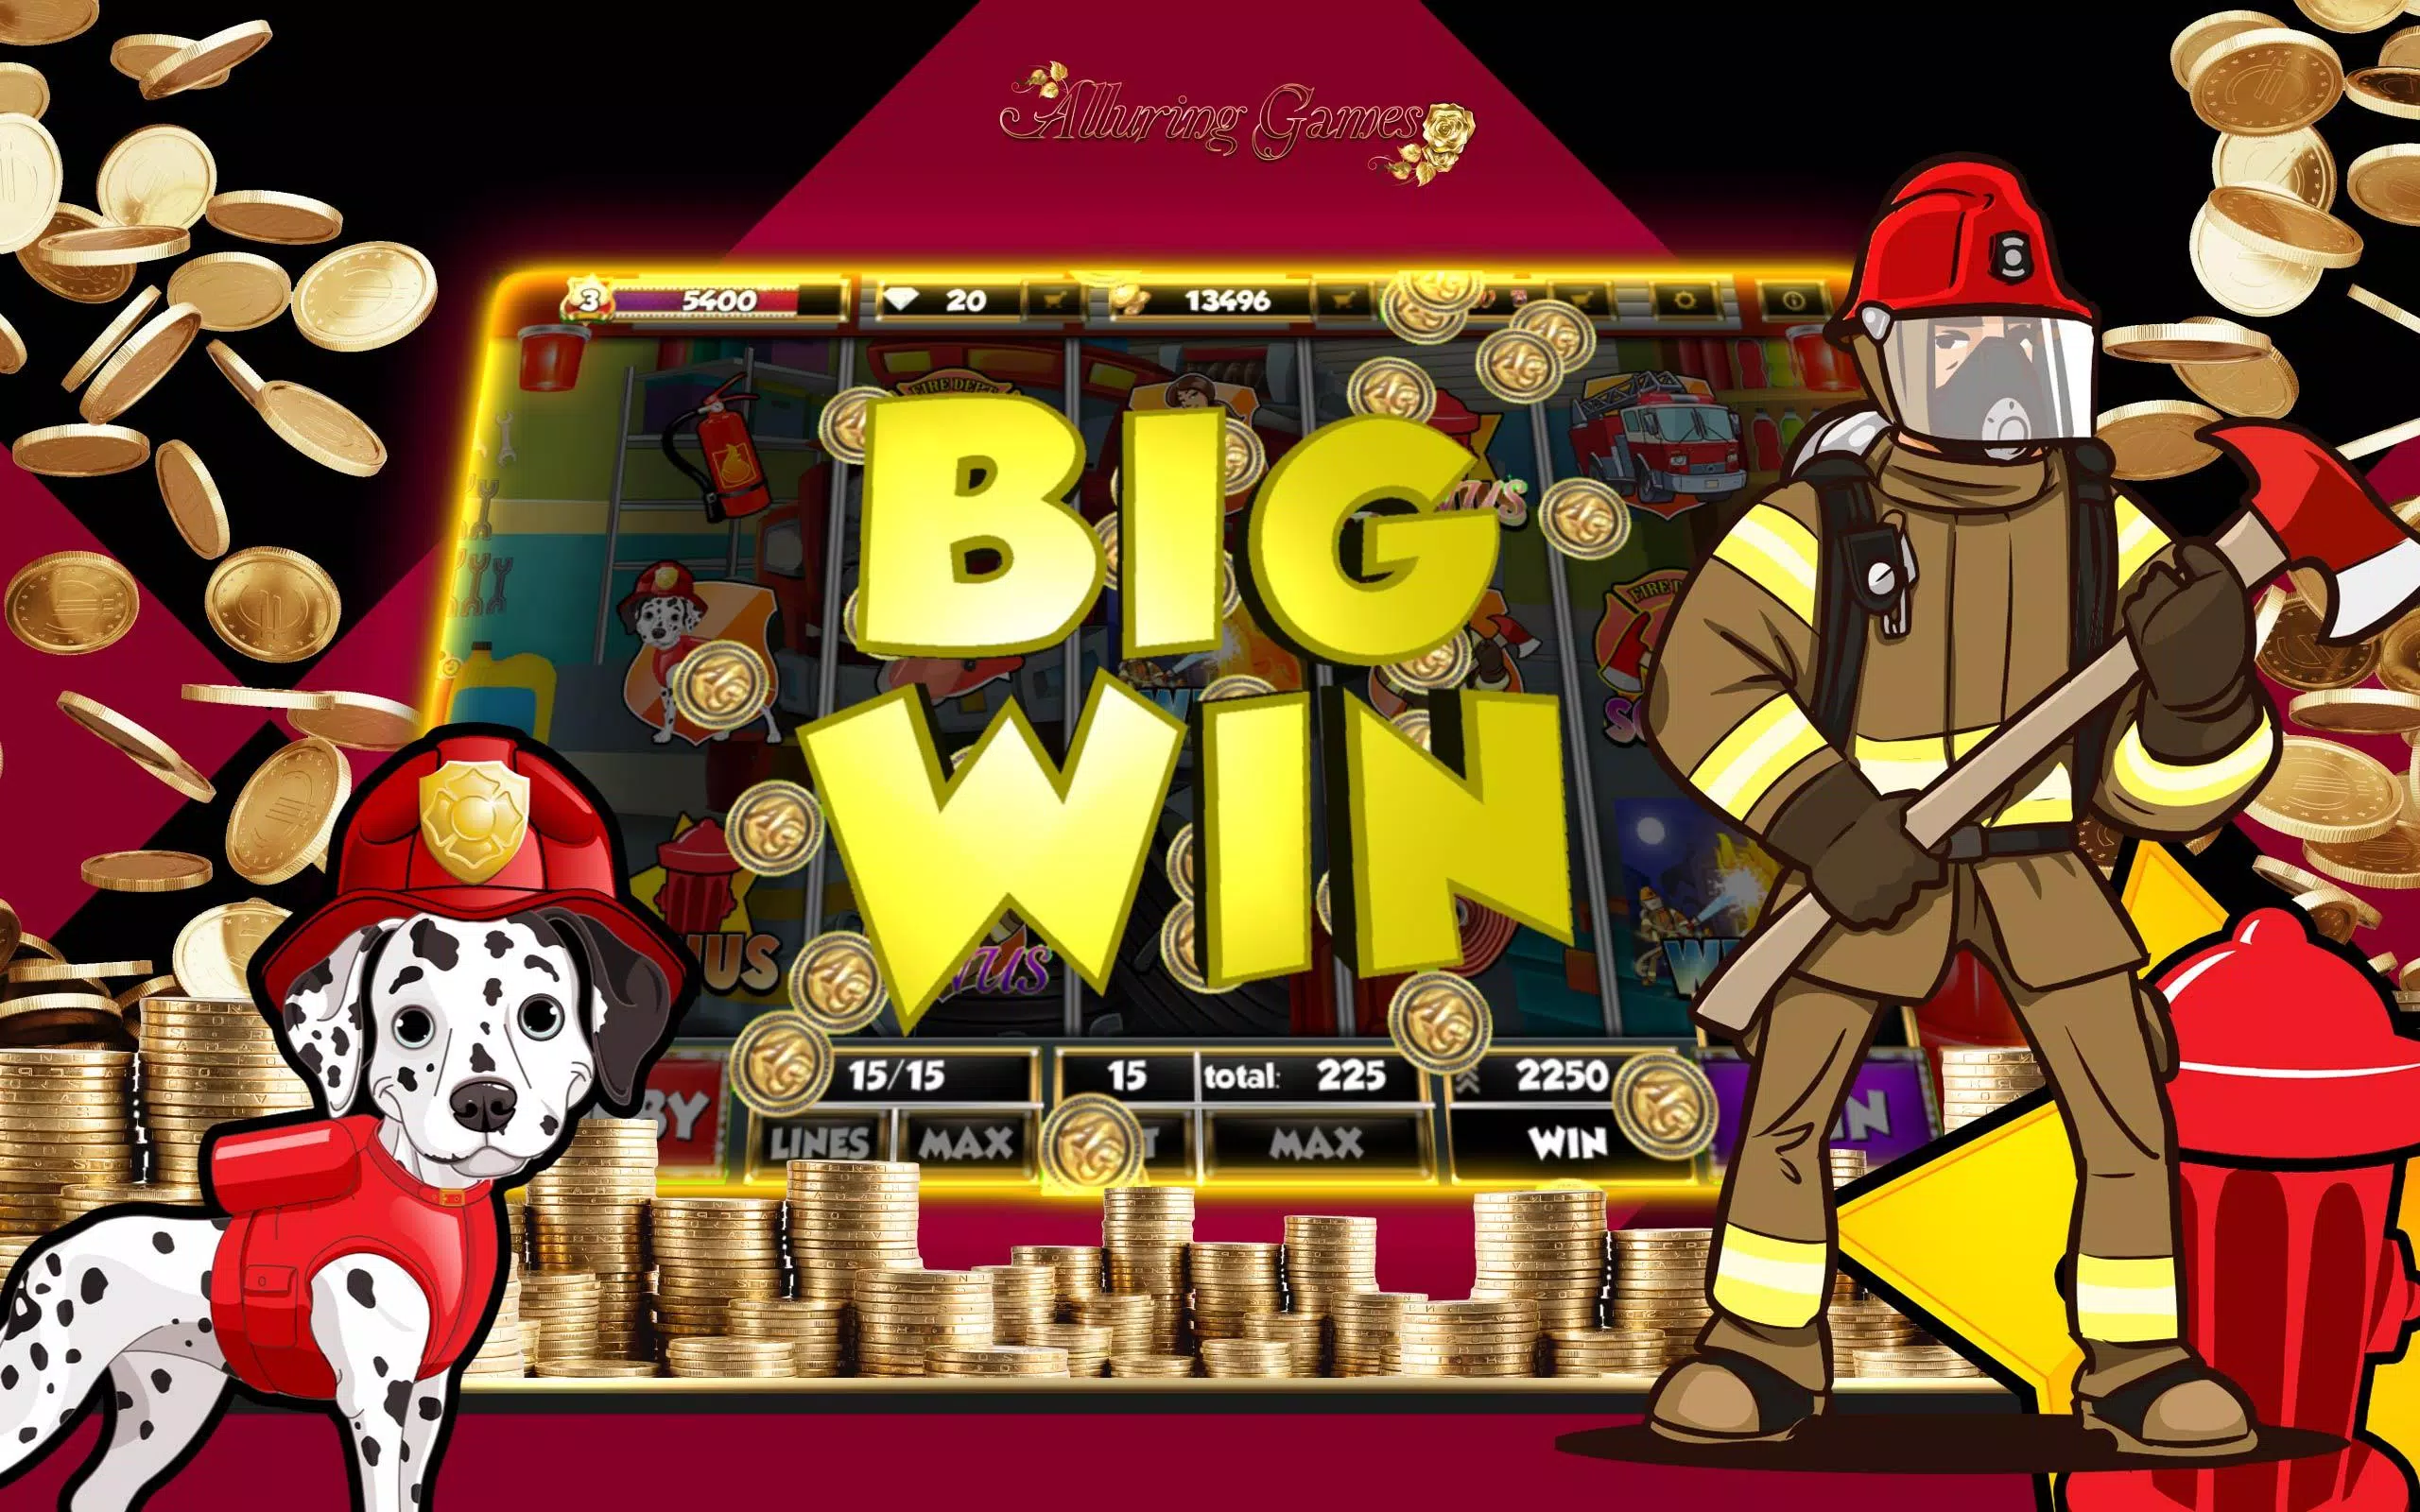 12 Free Game Fist of Fire Slot! (Part 1) #casino #slots #slotmachines  #casinoslots #slotvideos #slot 